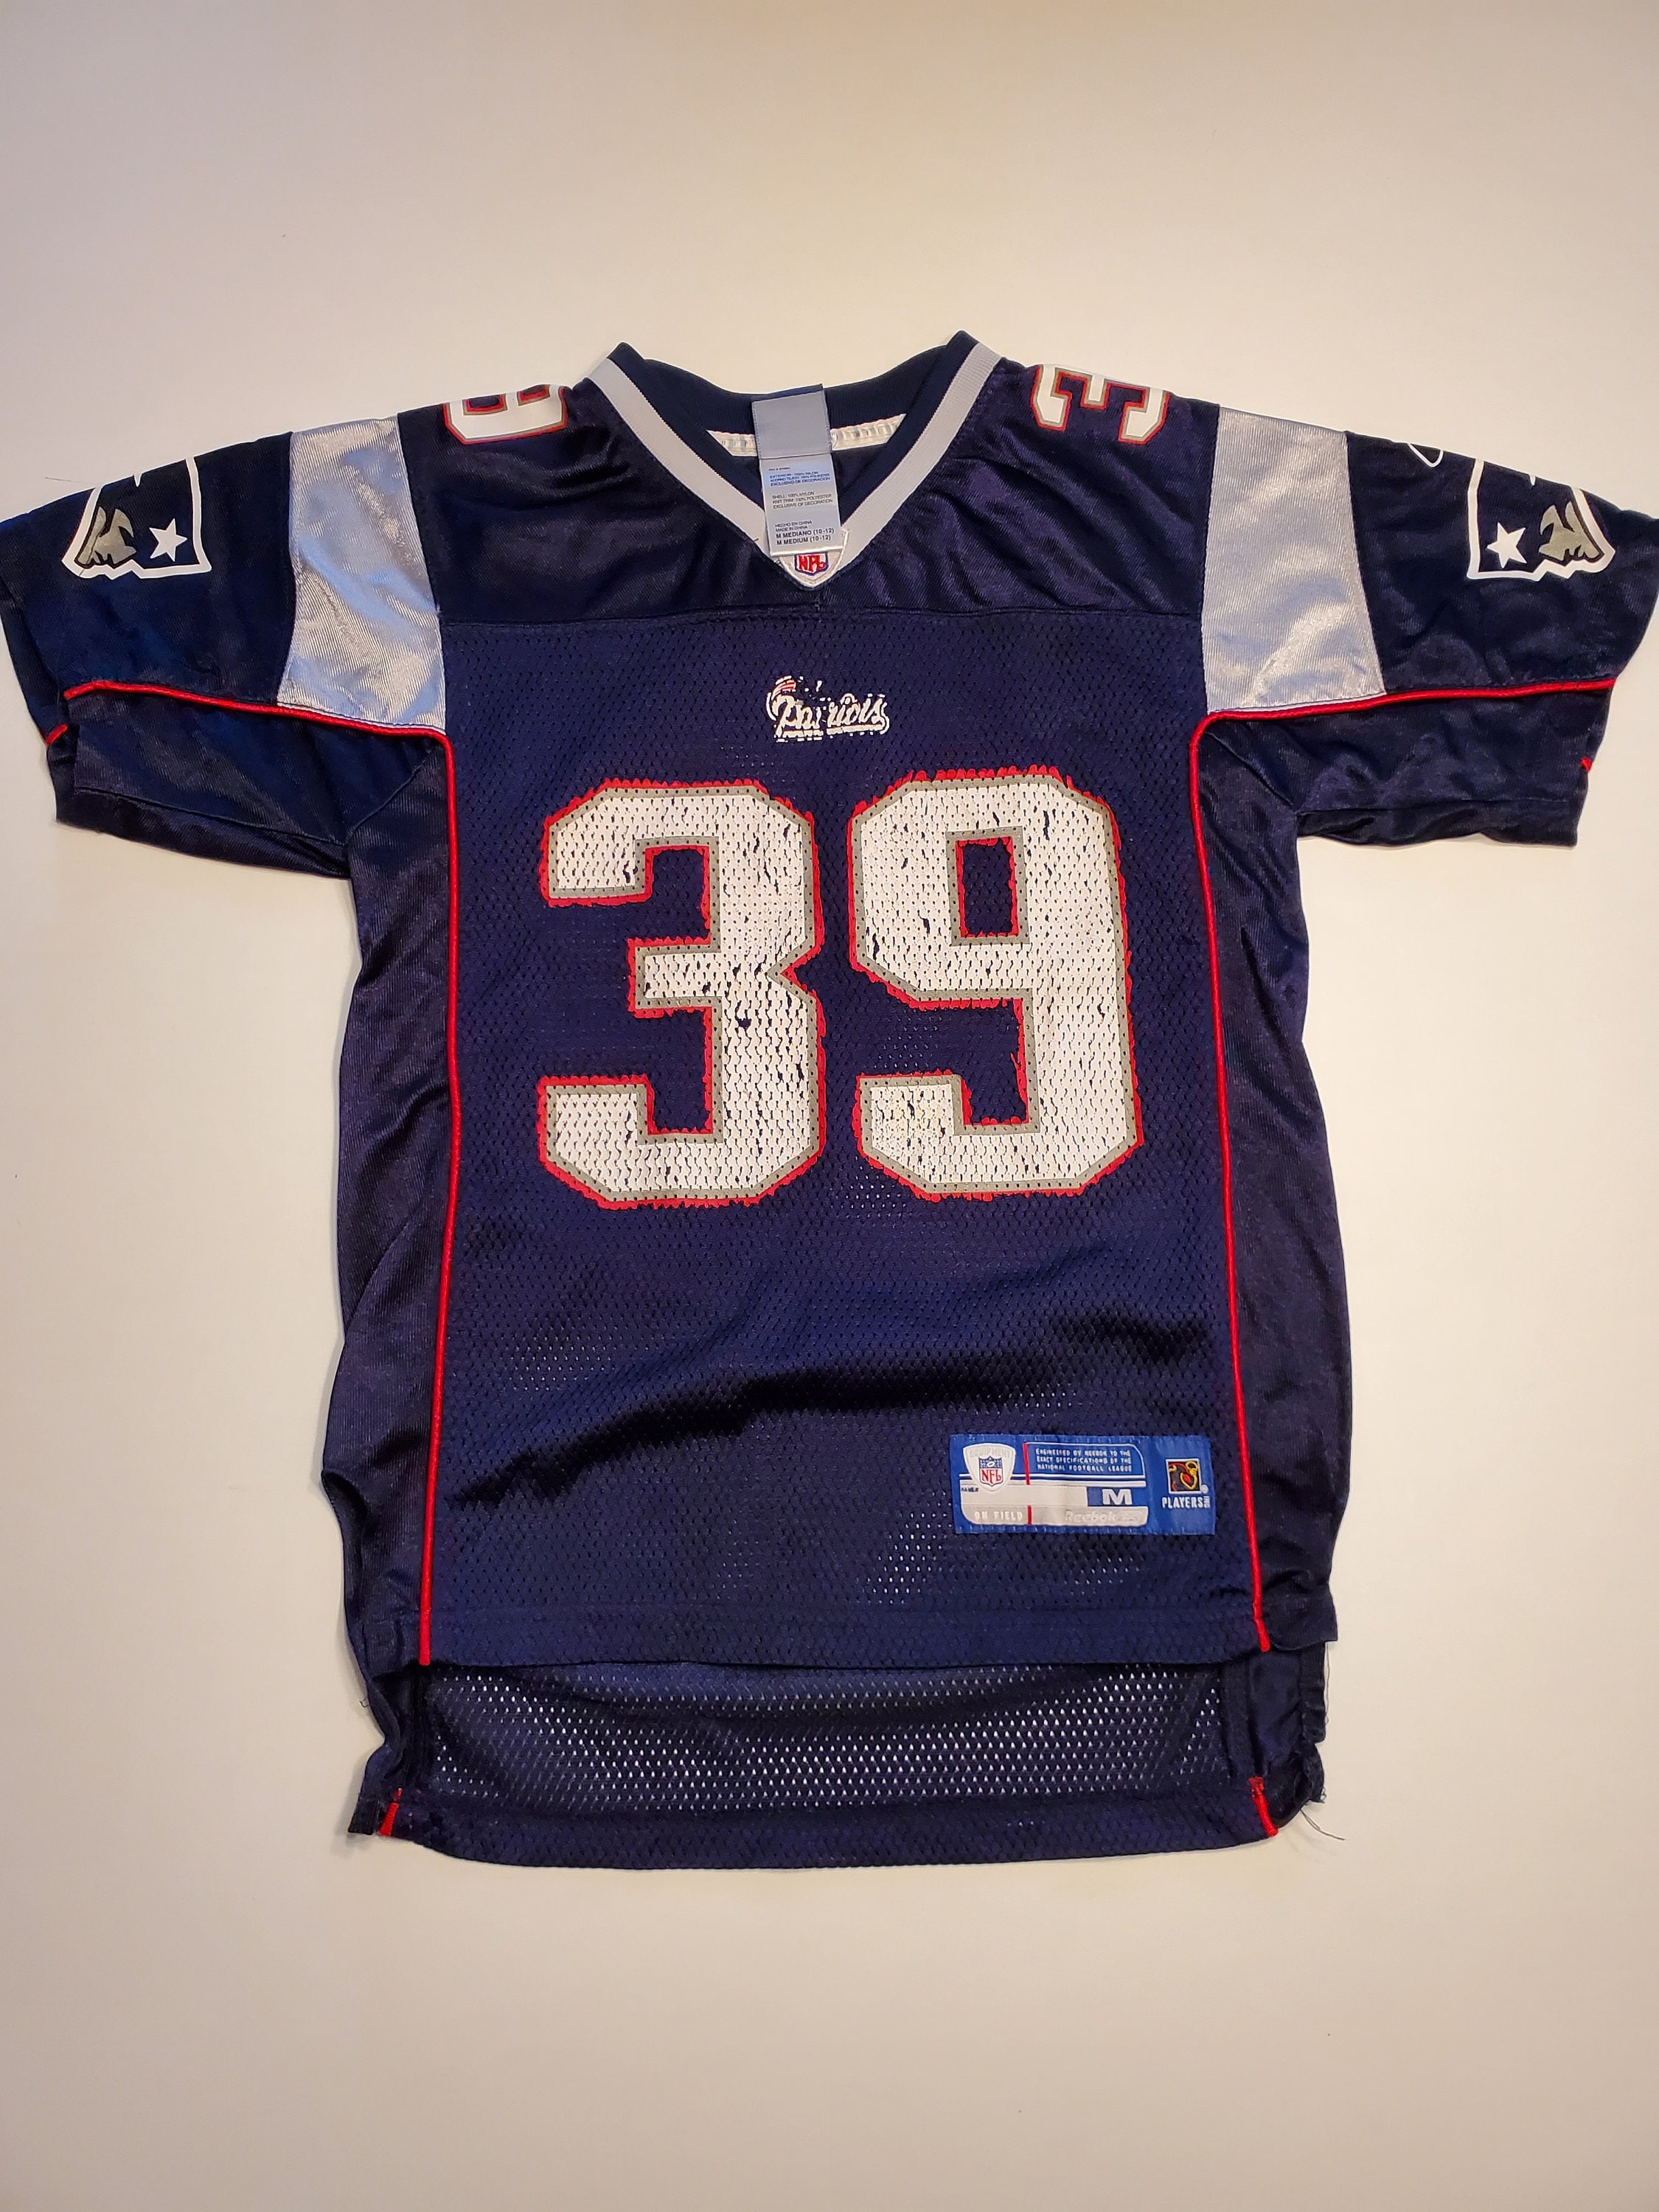 Vince Wilfork New England Patriots Autographed Custom Jersey Coa -JSA